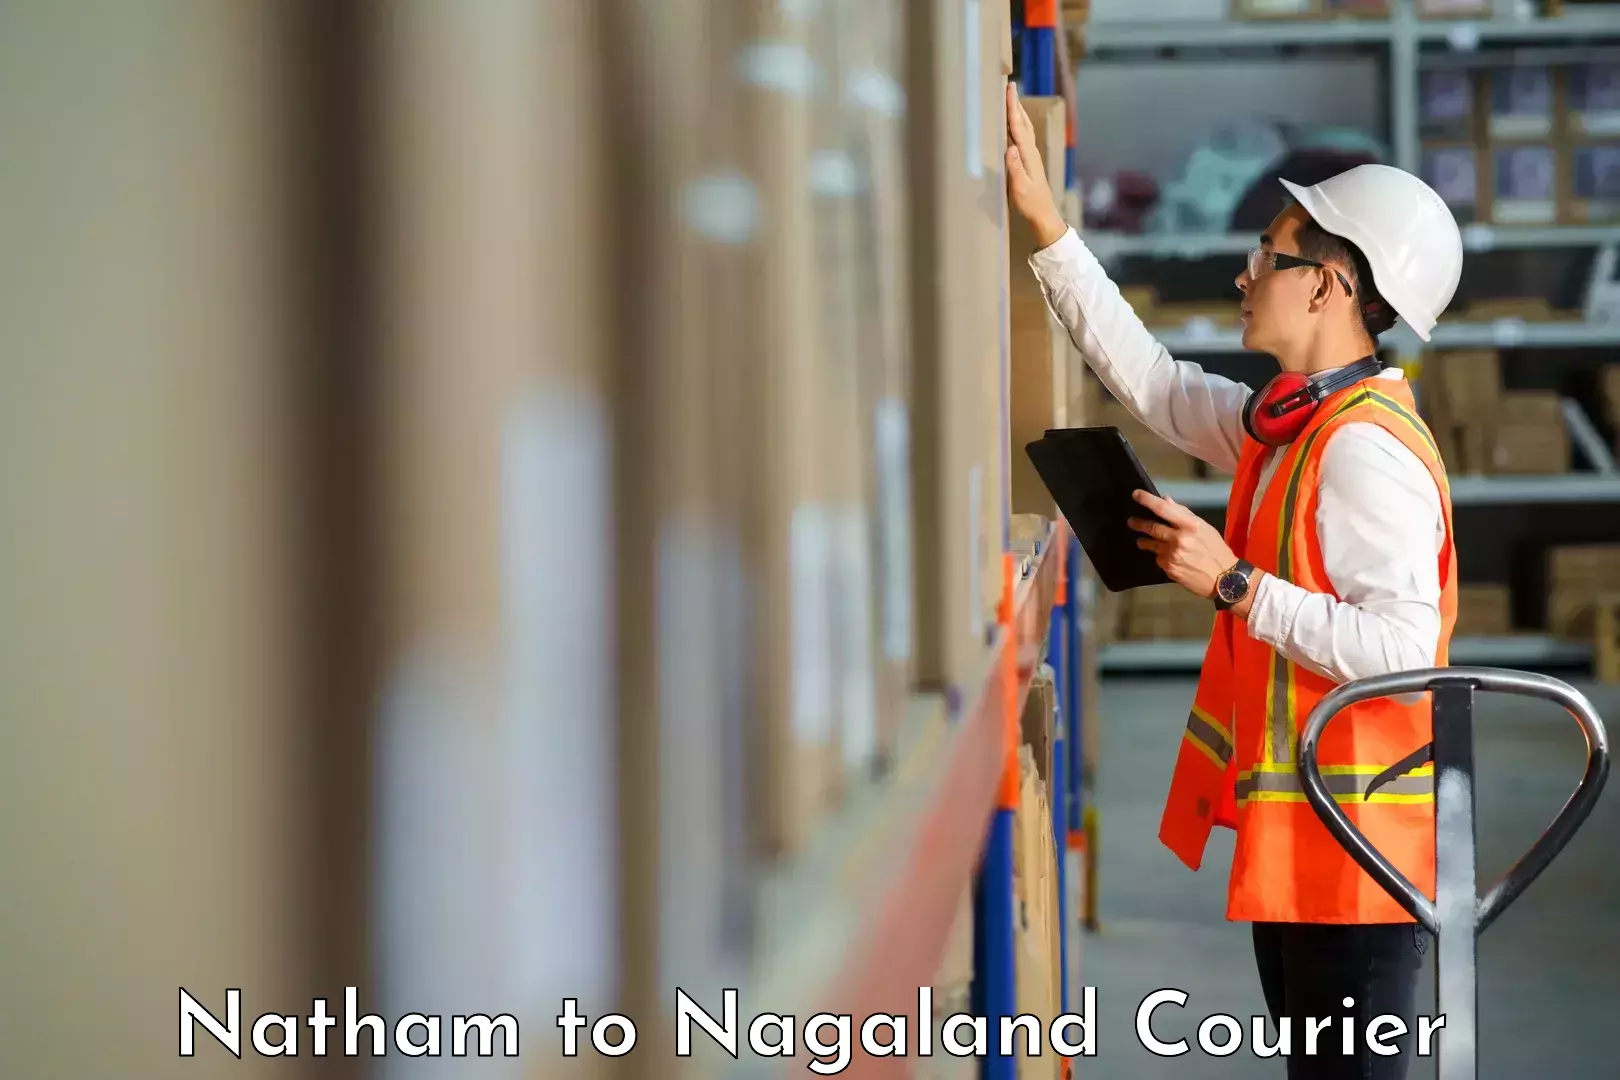 Courier service comparison Natham to Nagaland